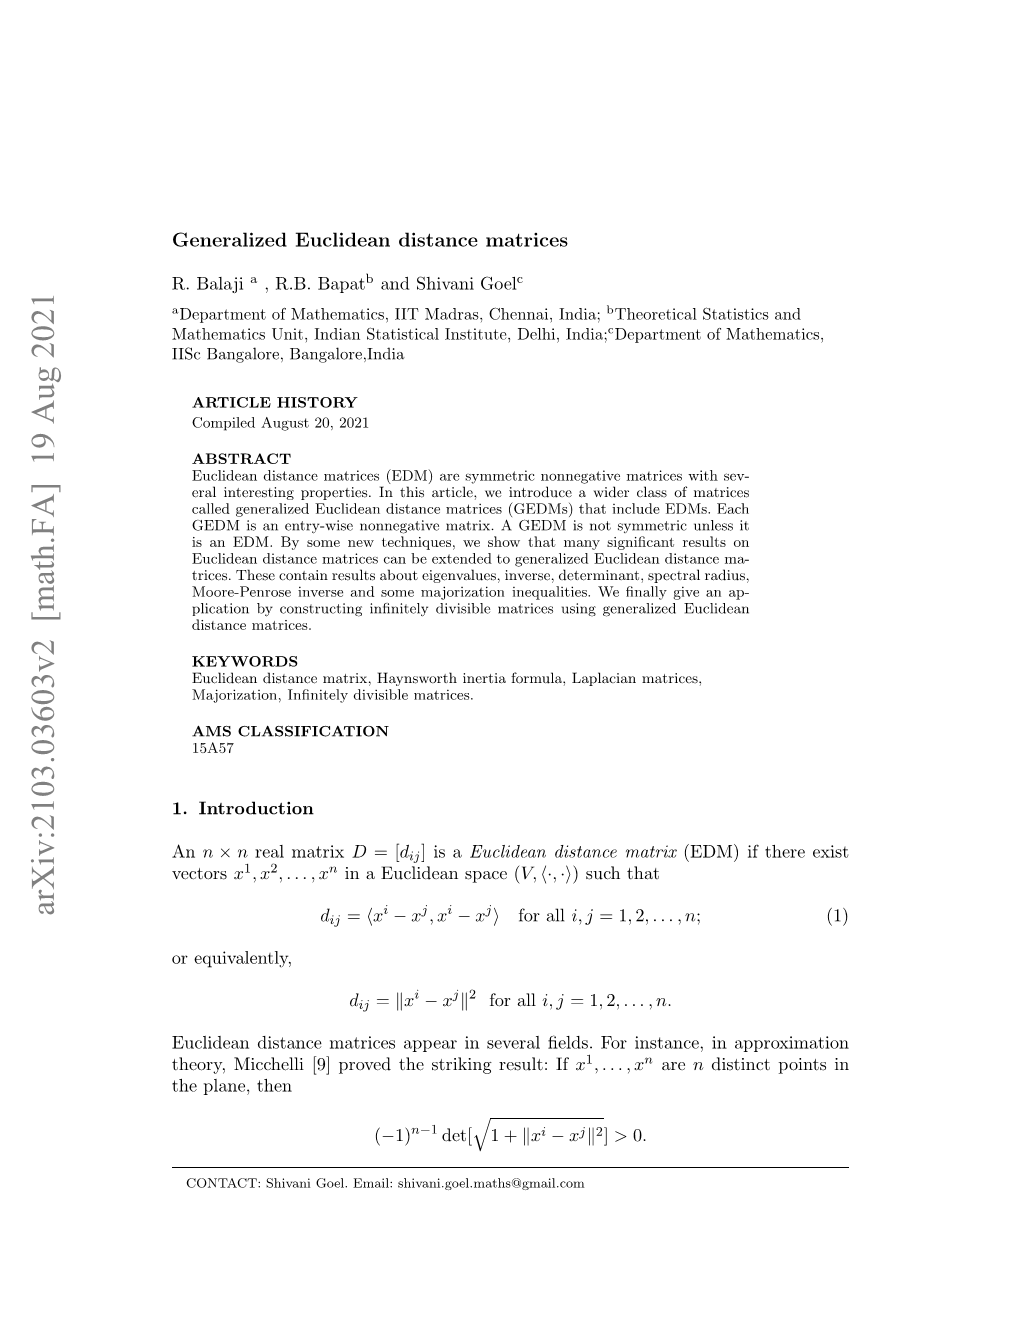 Generalized Euclidean Distance Matrices (GEDM)